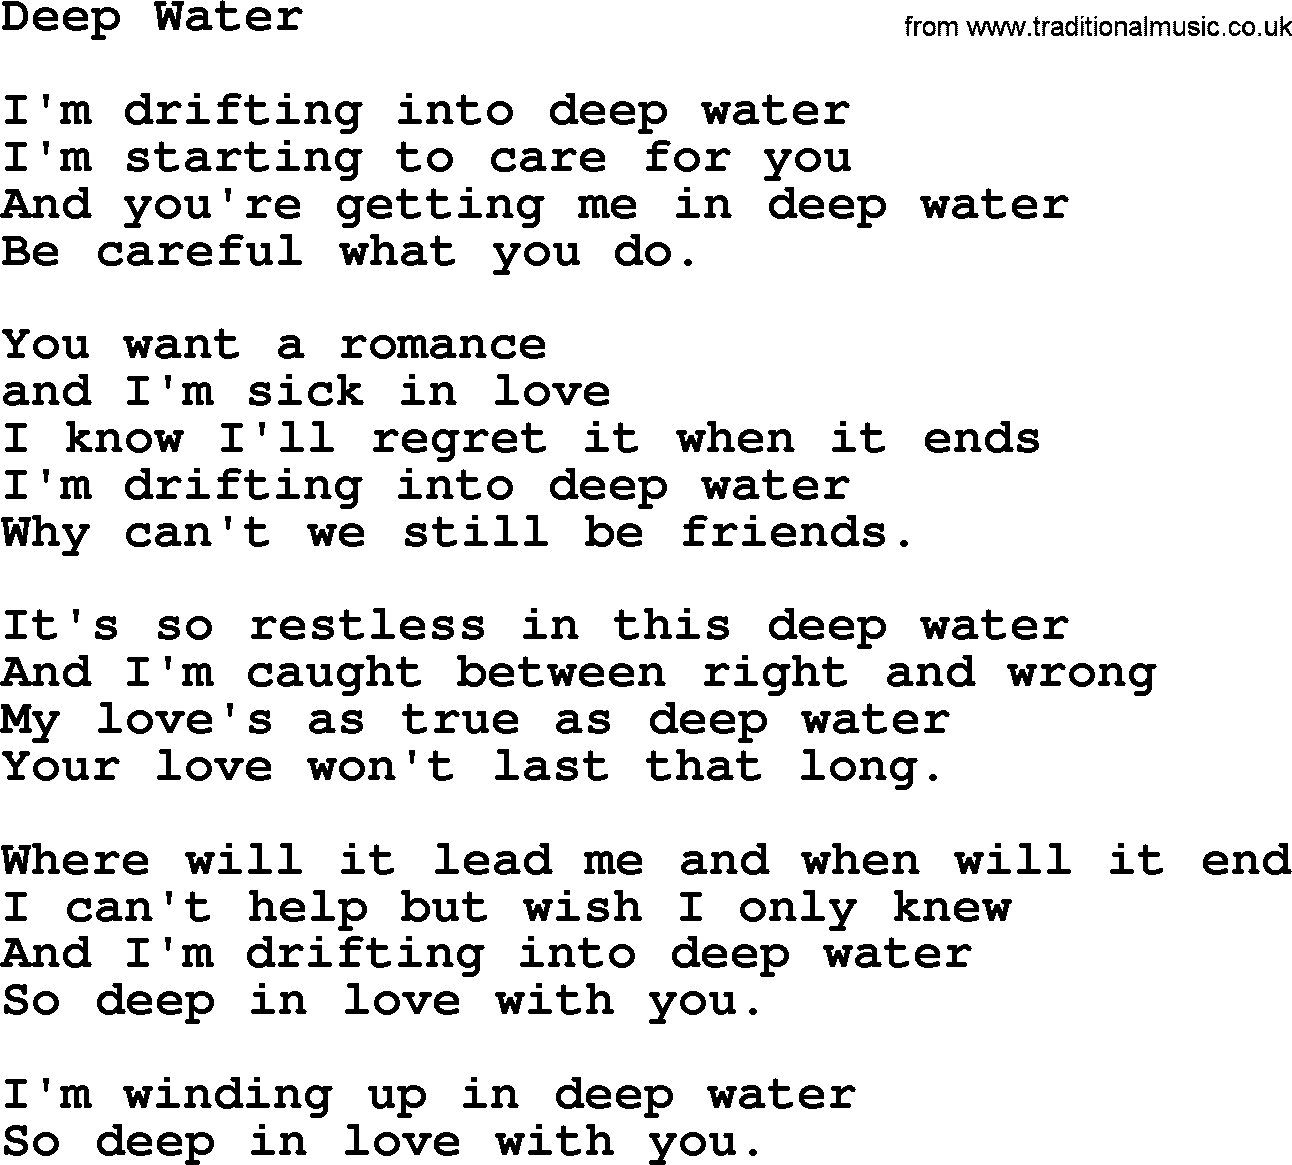 Willie Nelson song: Deep Water lyrics